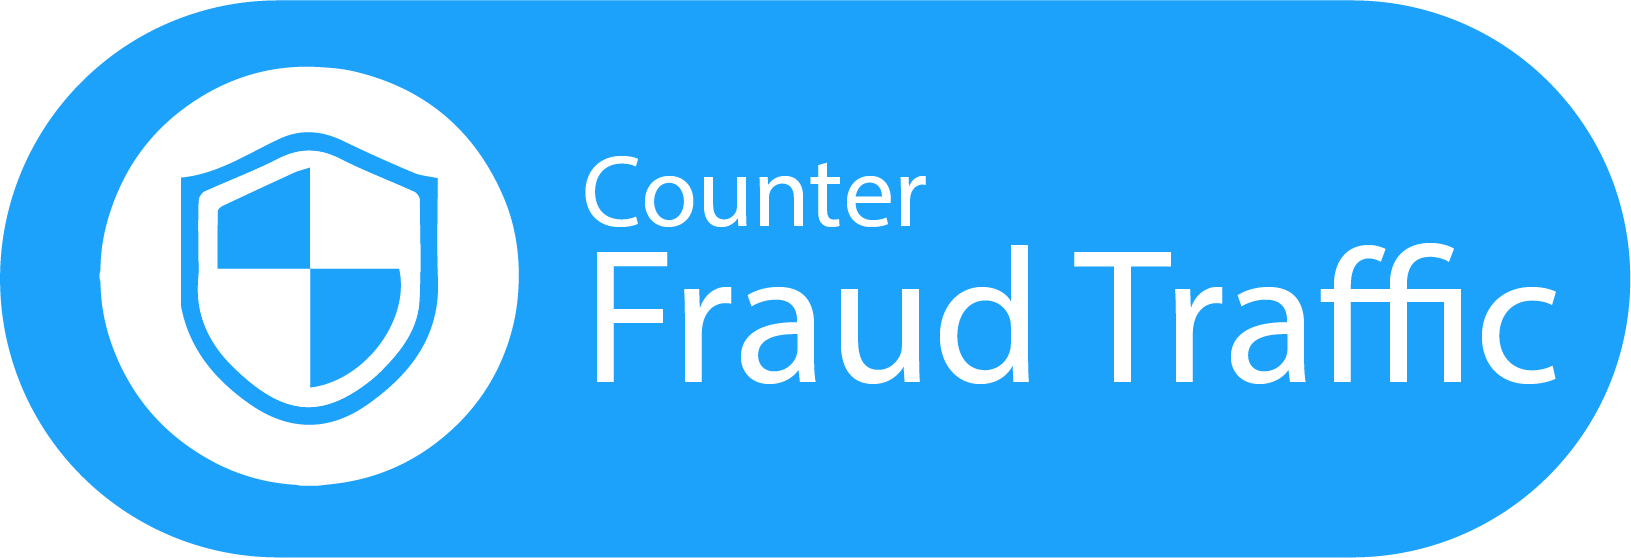 Counter Fraud Traffic